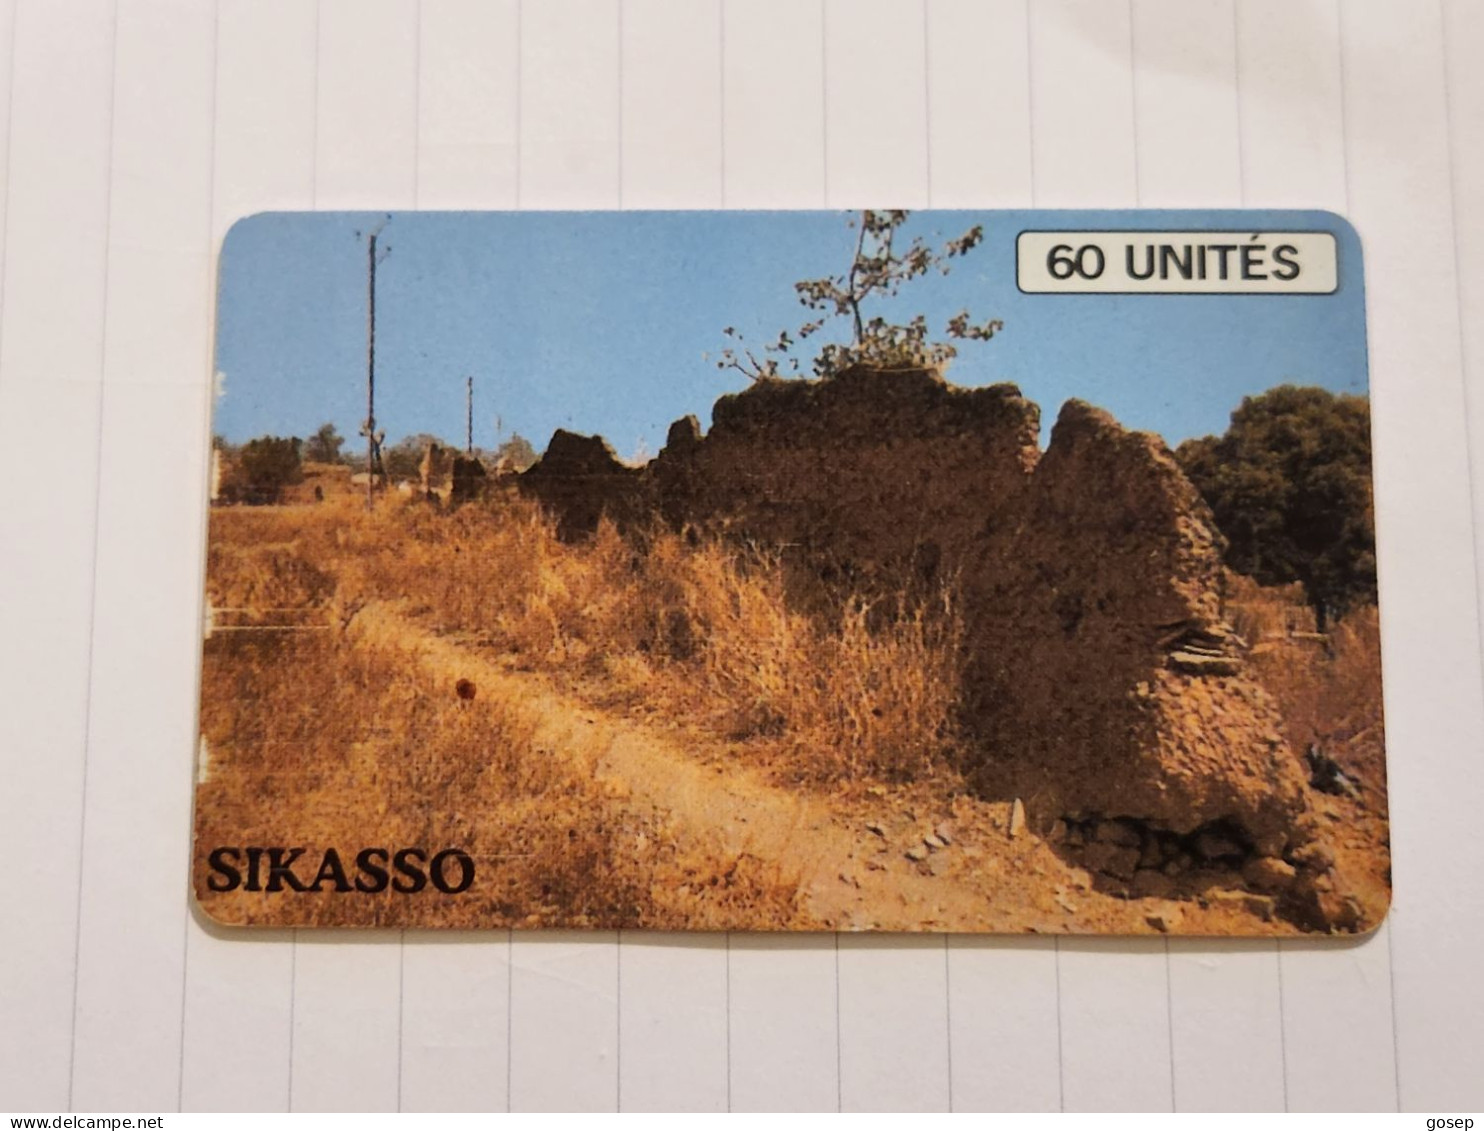 MALI-(MAL-O-30)-Sikasso-(Black)-(36)-(60units)-(002961148)-(tirage-100.000)+1card Prepiad - Mali